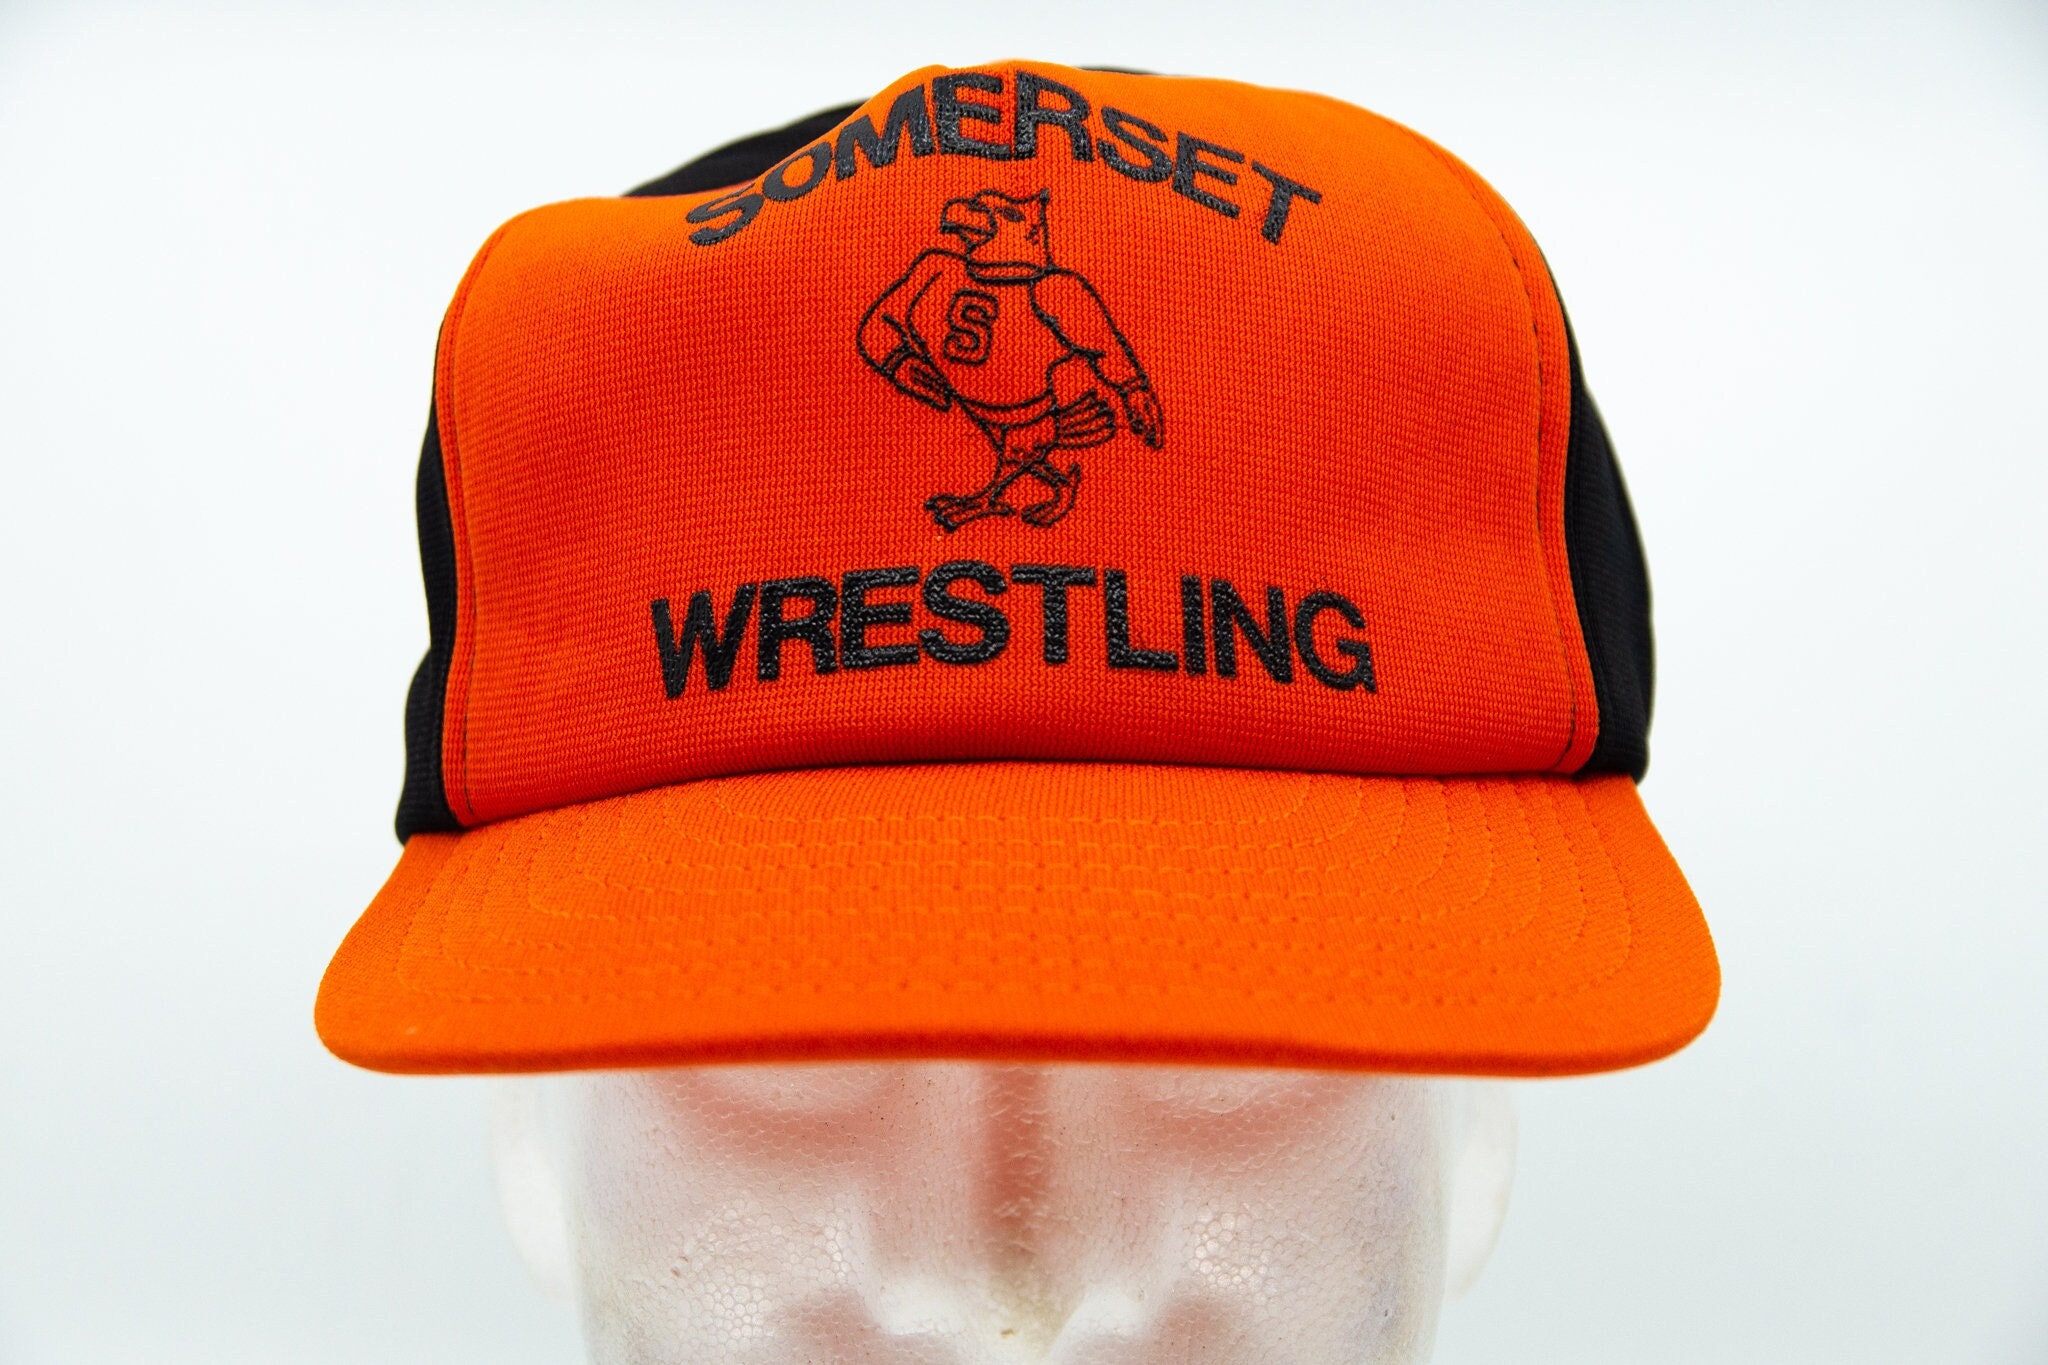 New Japan Pro-Wrestling - Bullet Club Flexfit Hat